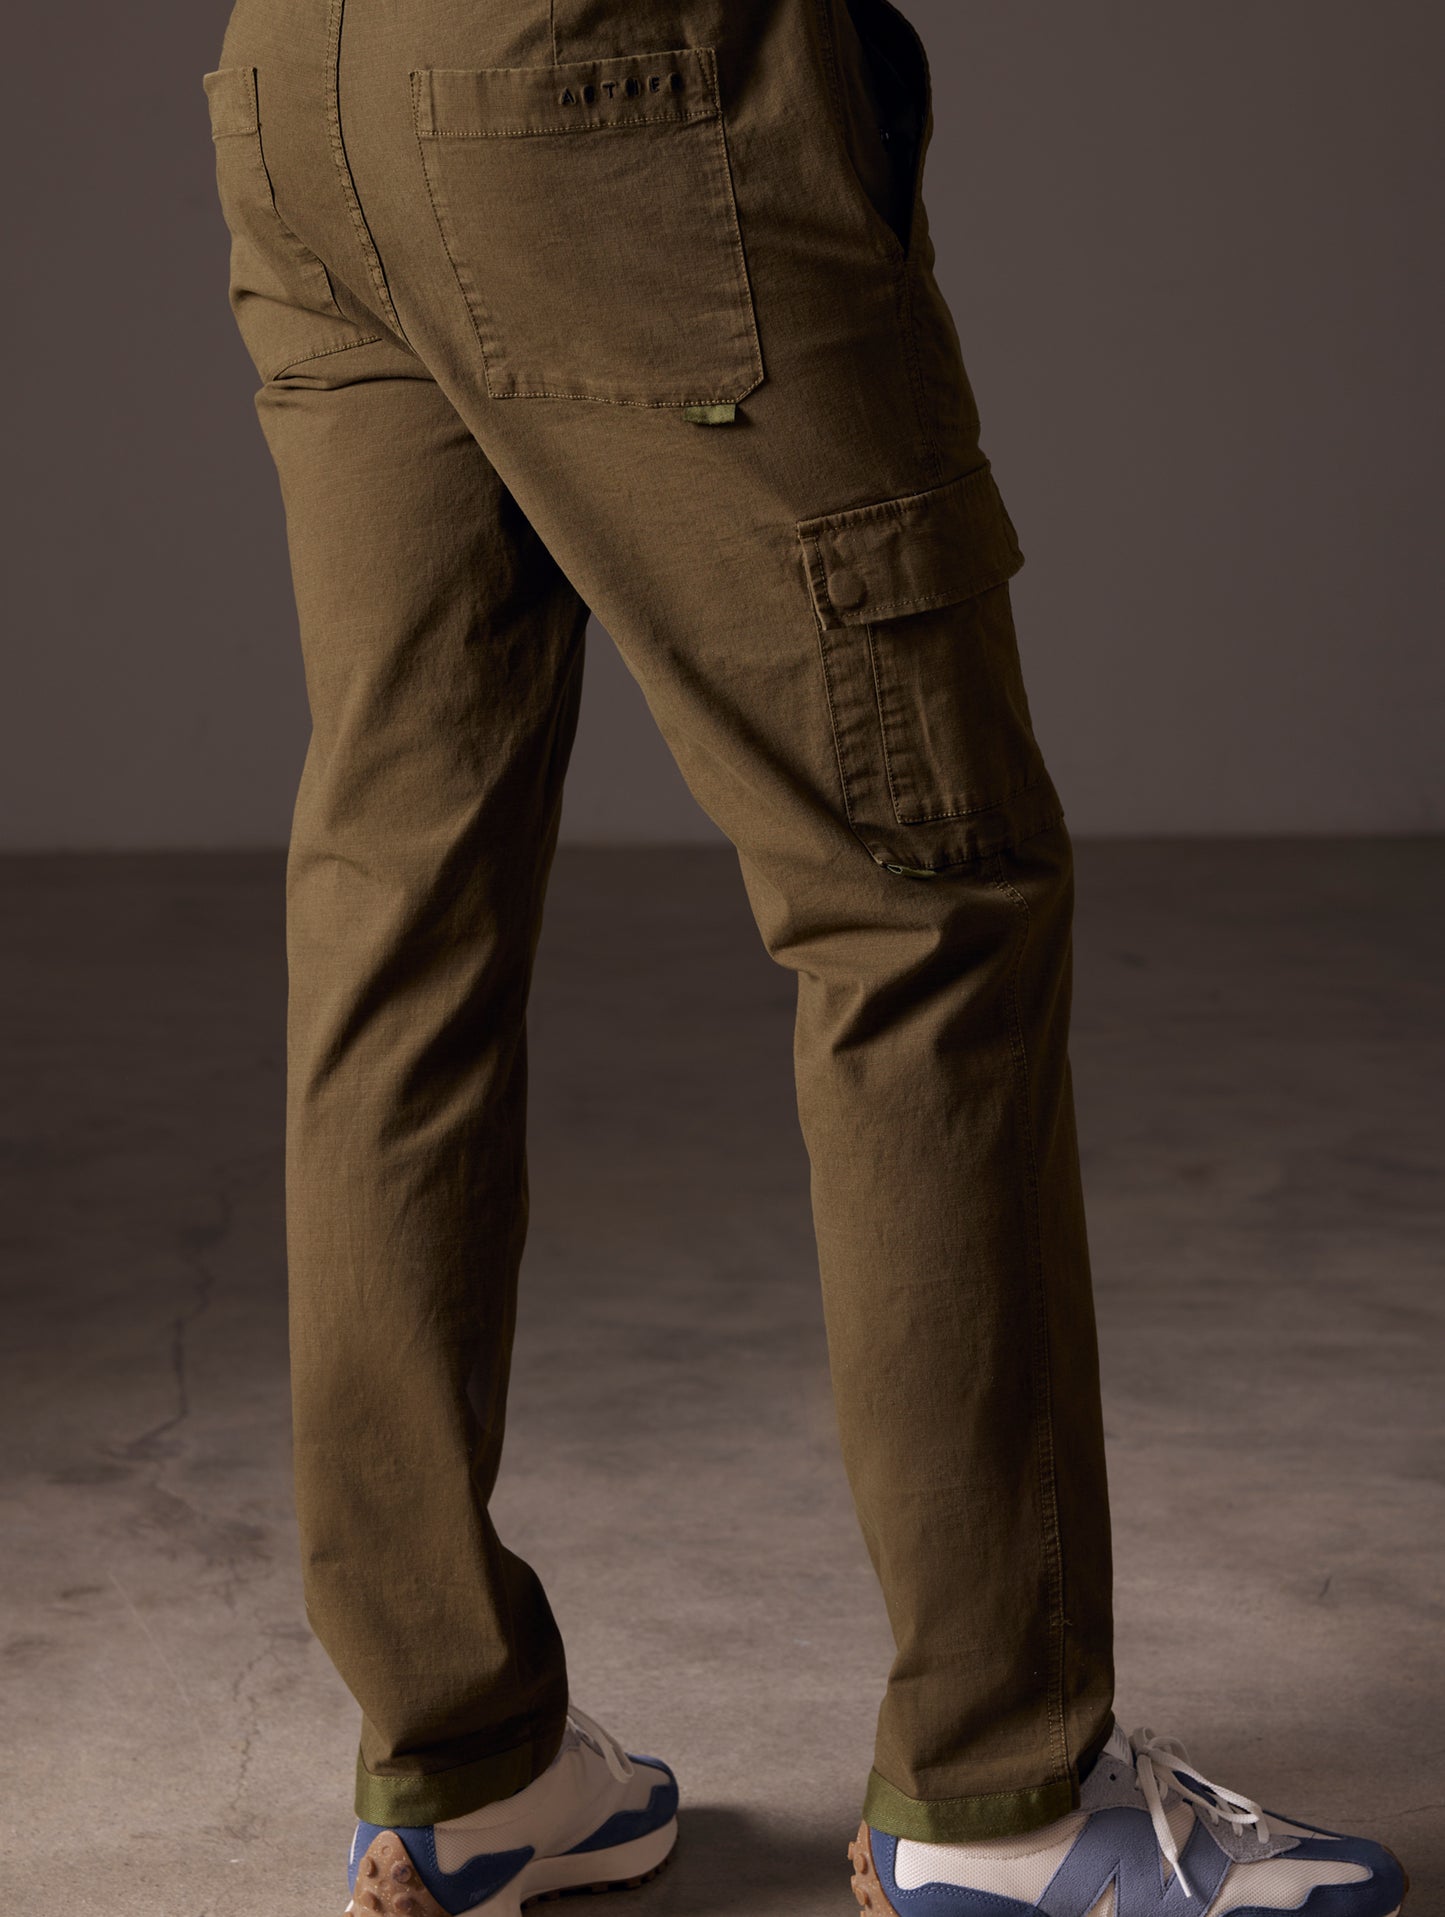 back view of man wearing green cotton ripstop pants